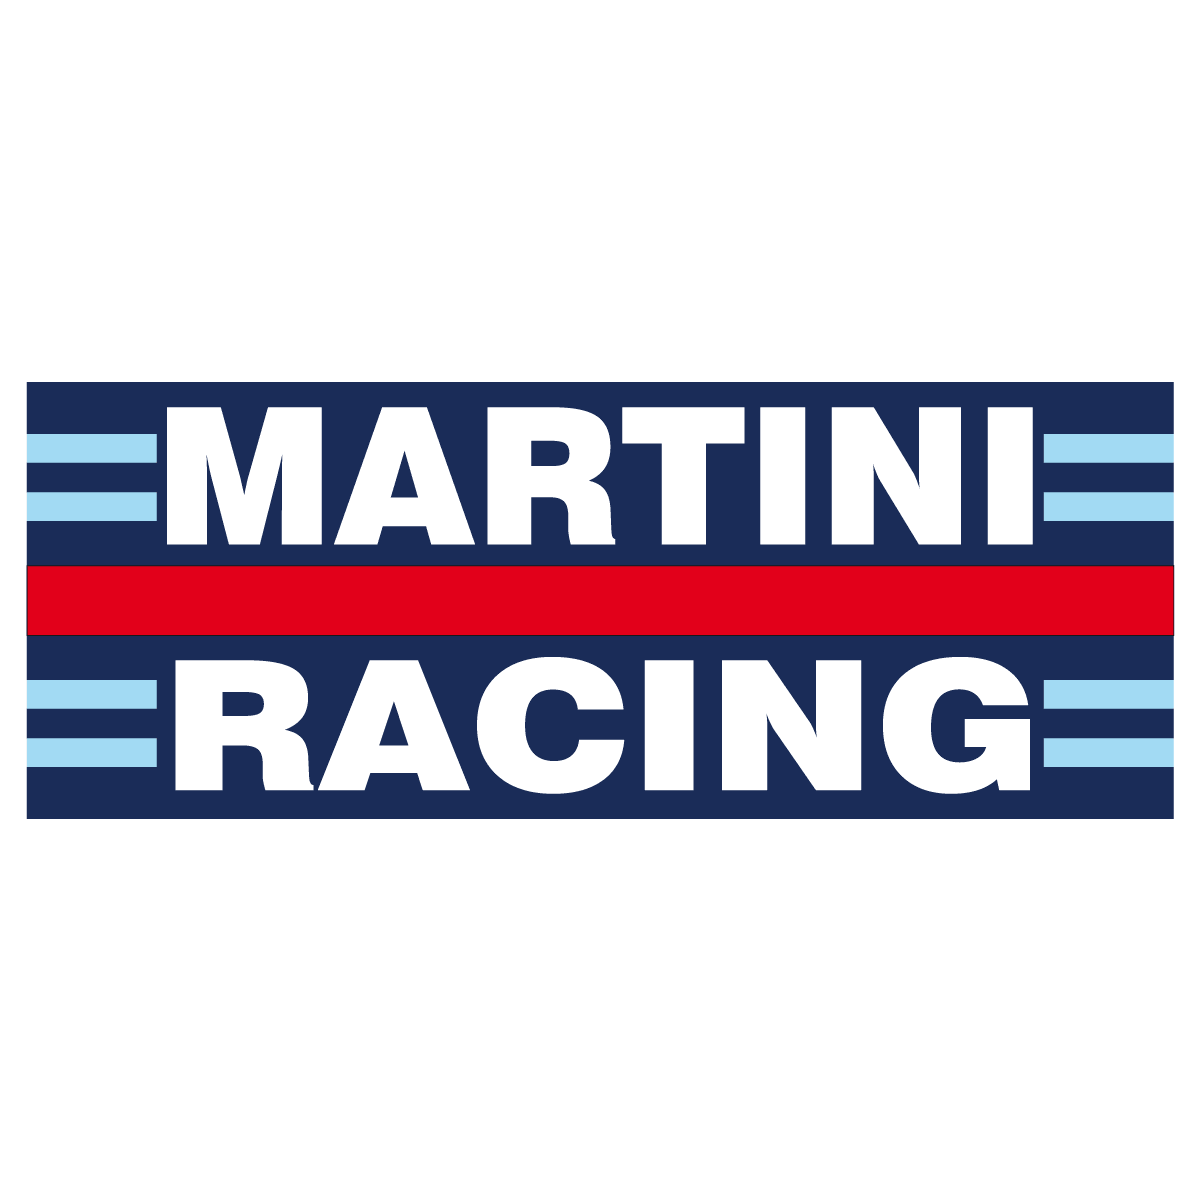 Car & Motorbike Stickers: Martini racing